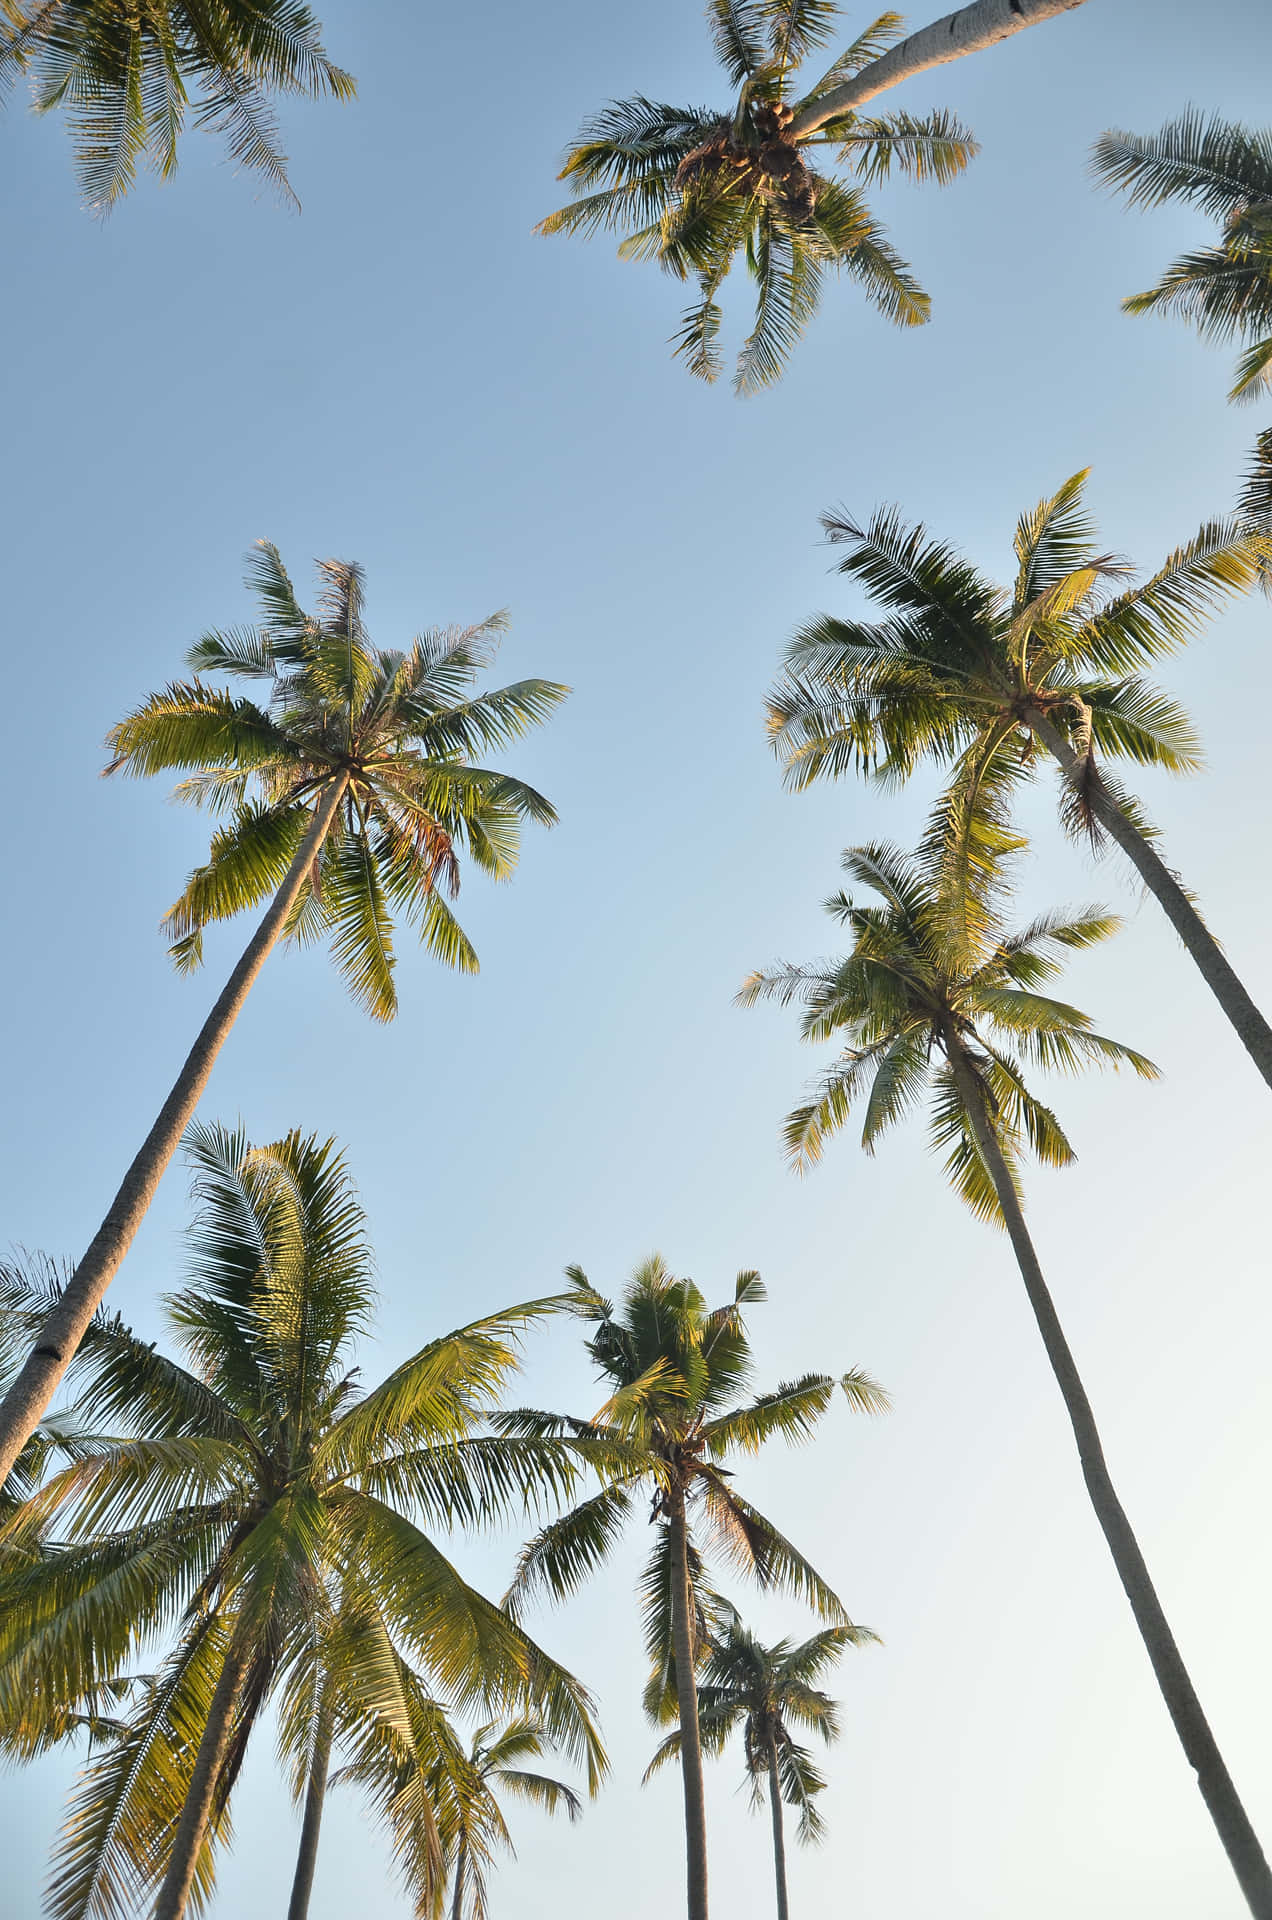 A lush, lush palm tree, perfect for a sandy beach getaway. Wallpaper